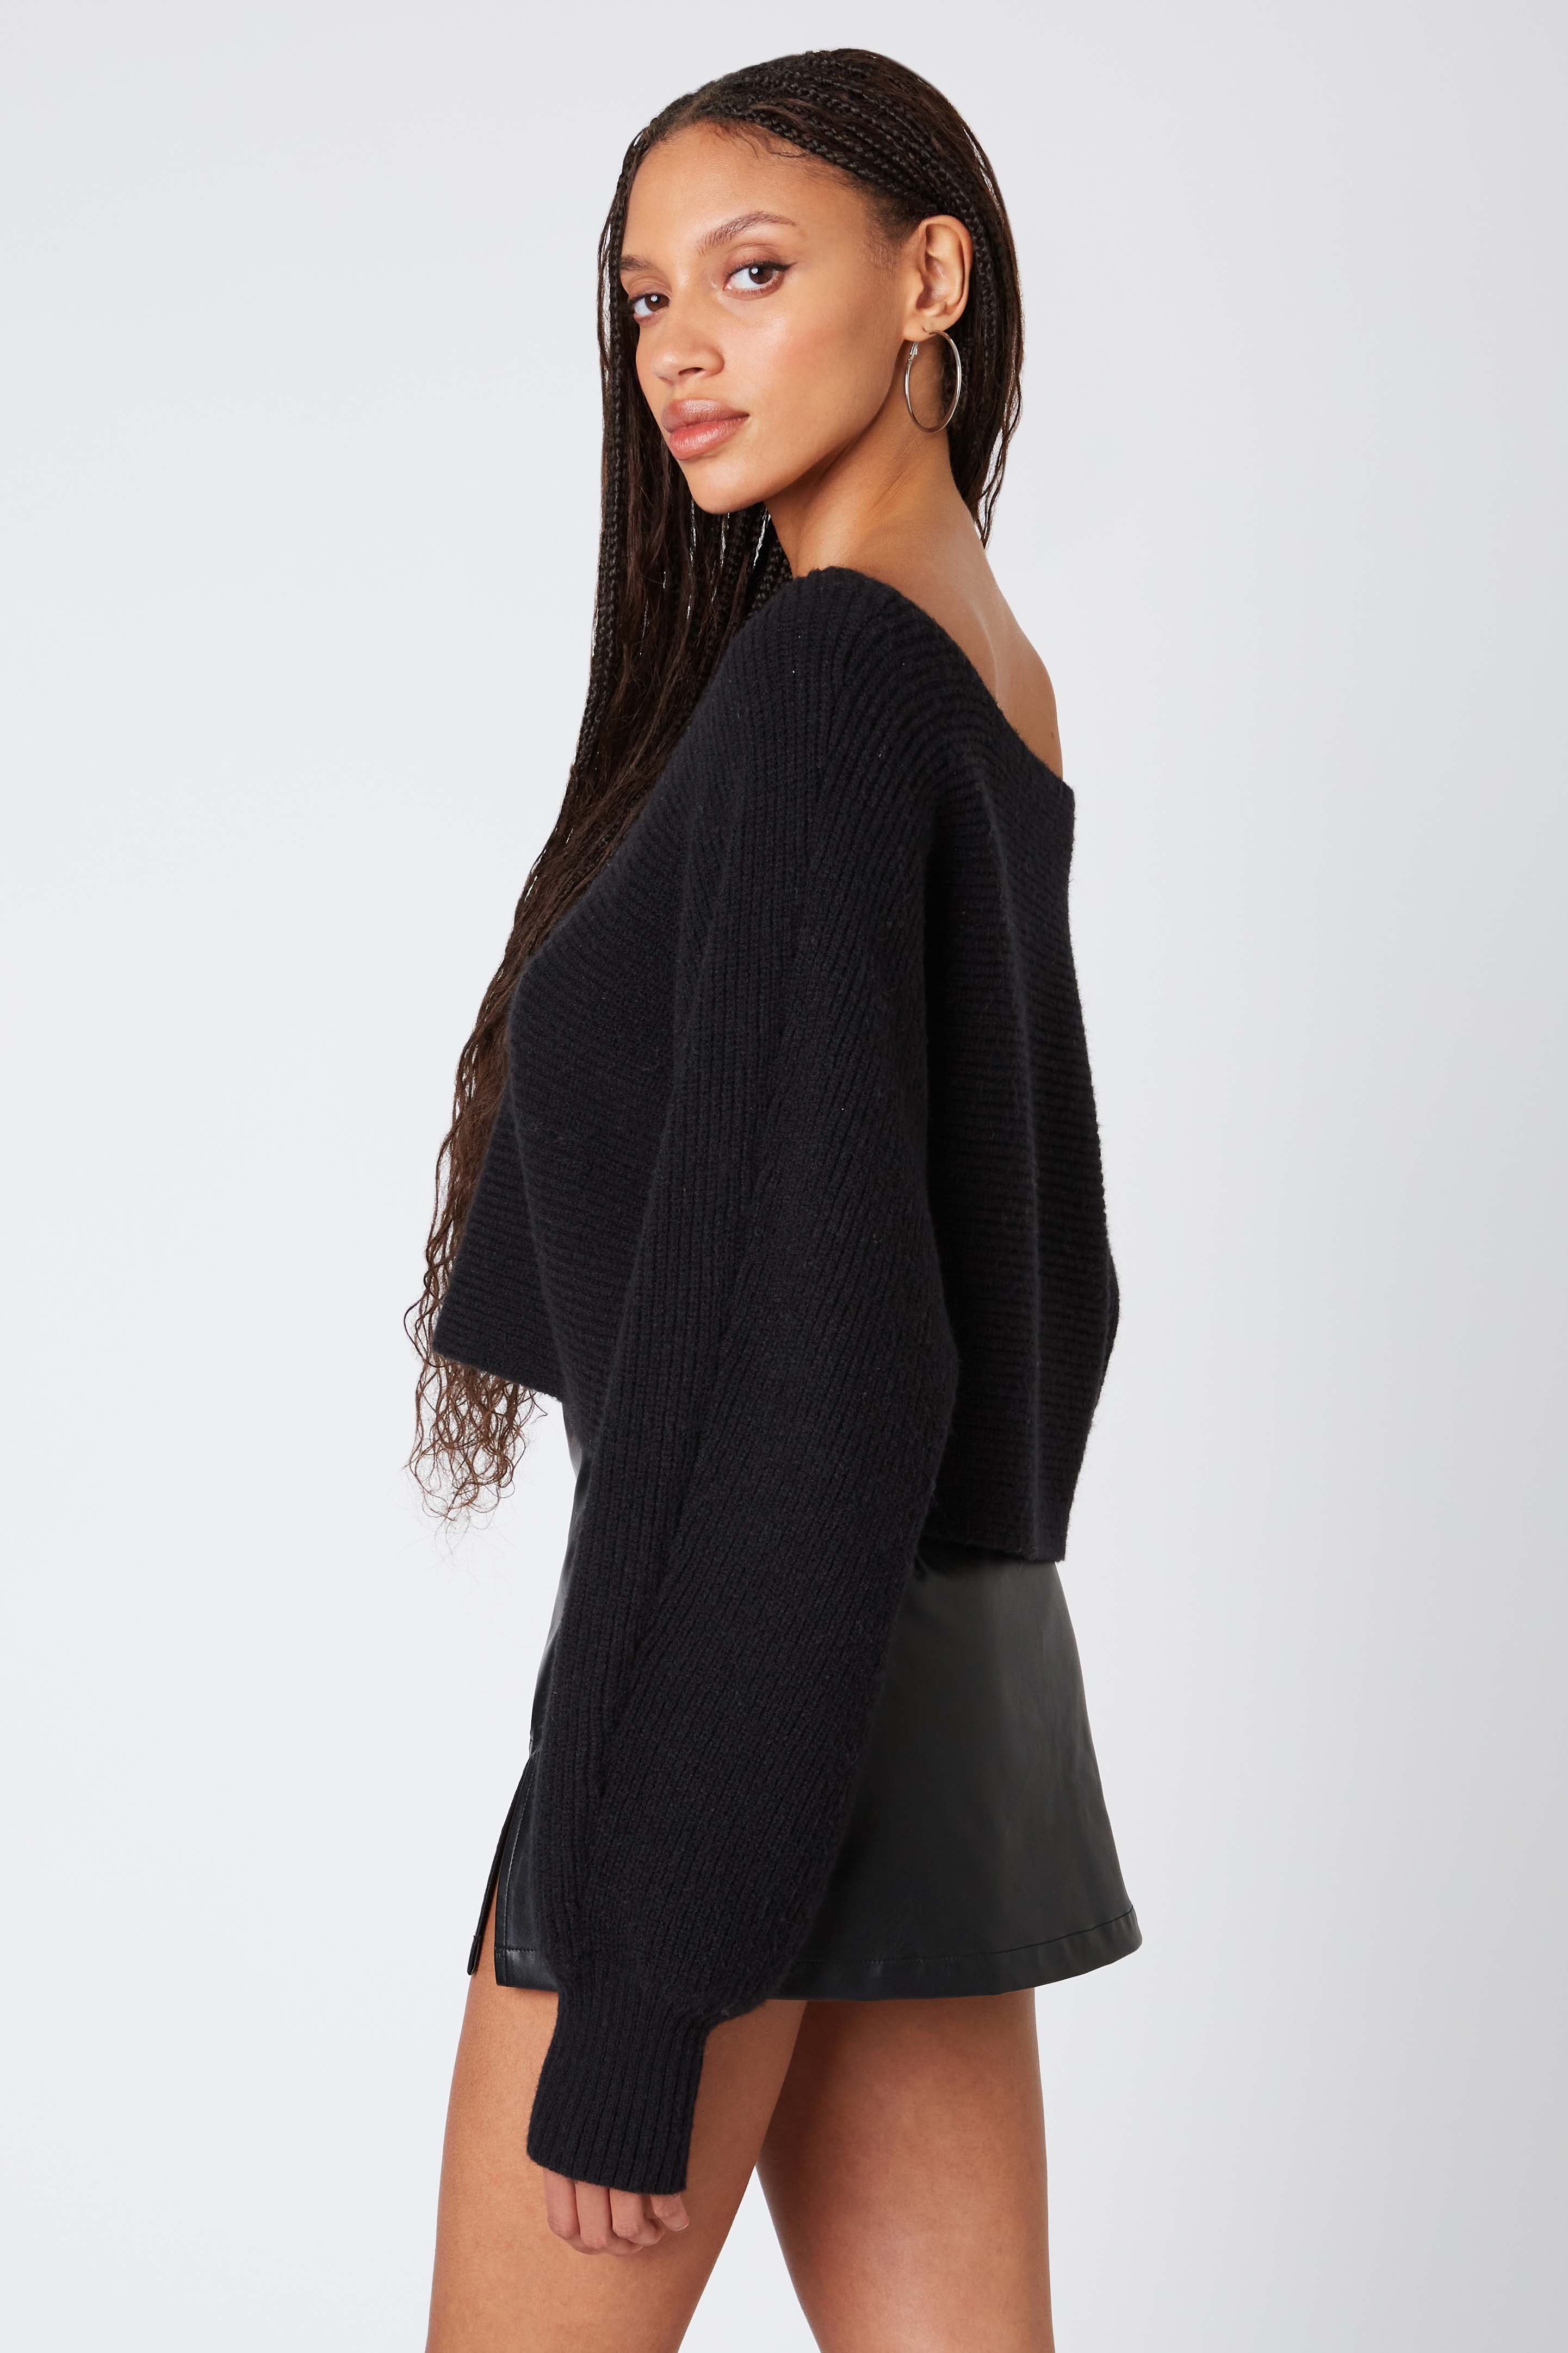 Off-Shoulder Knit Sweater in Black Side View